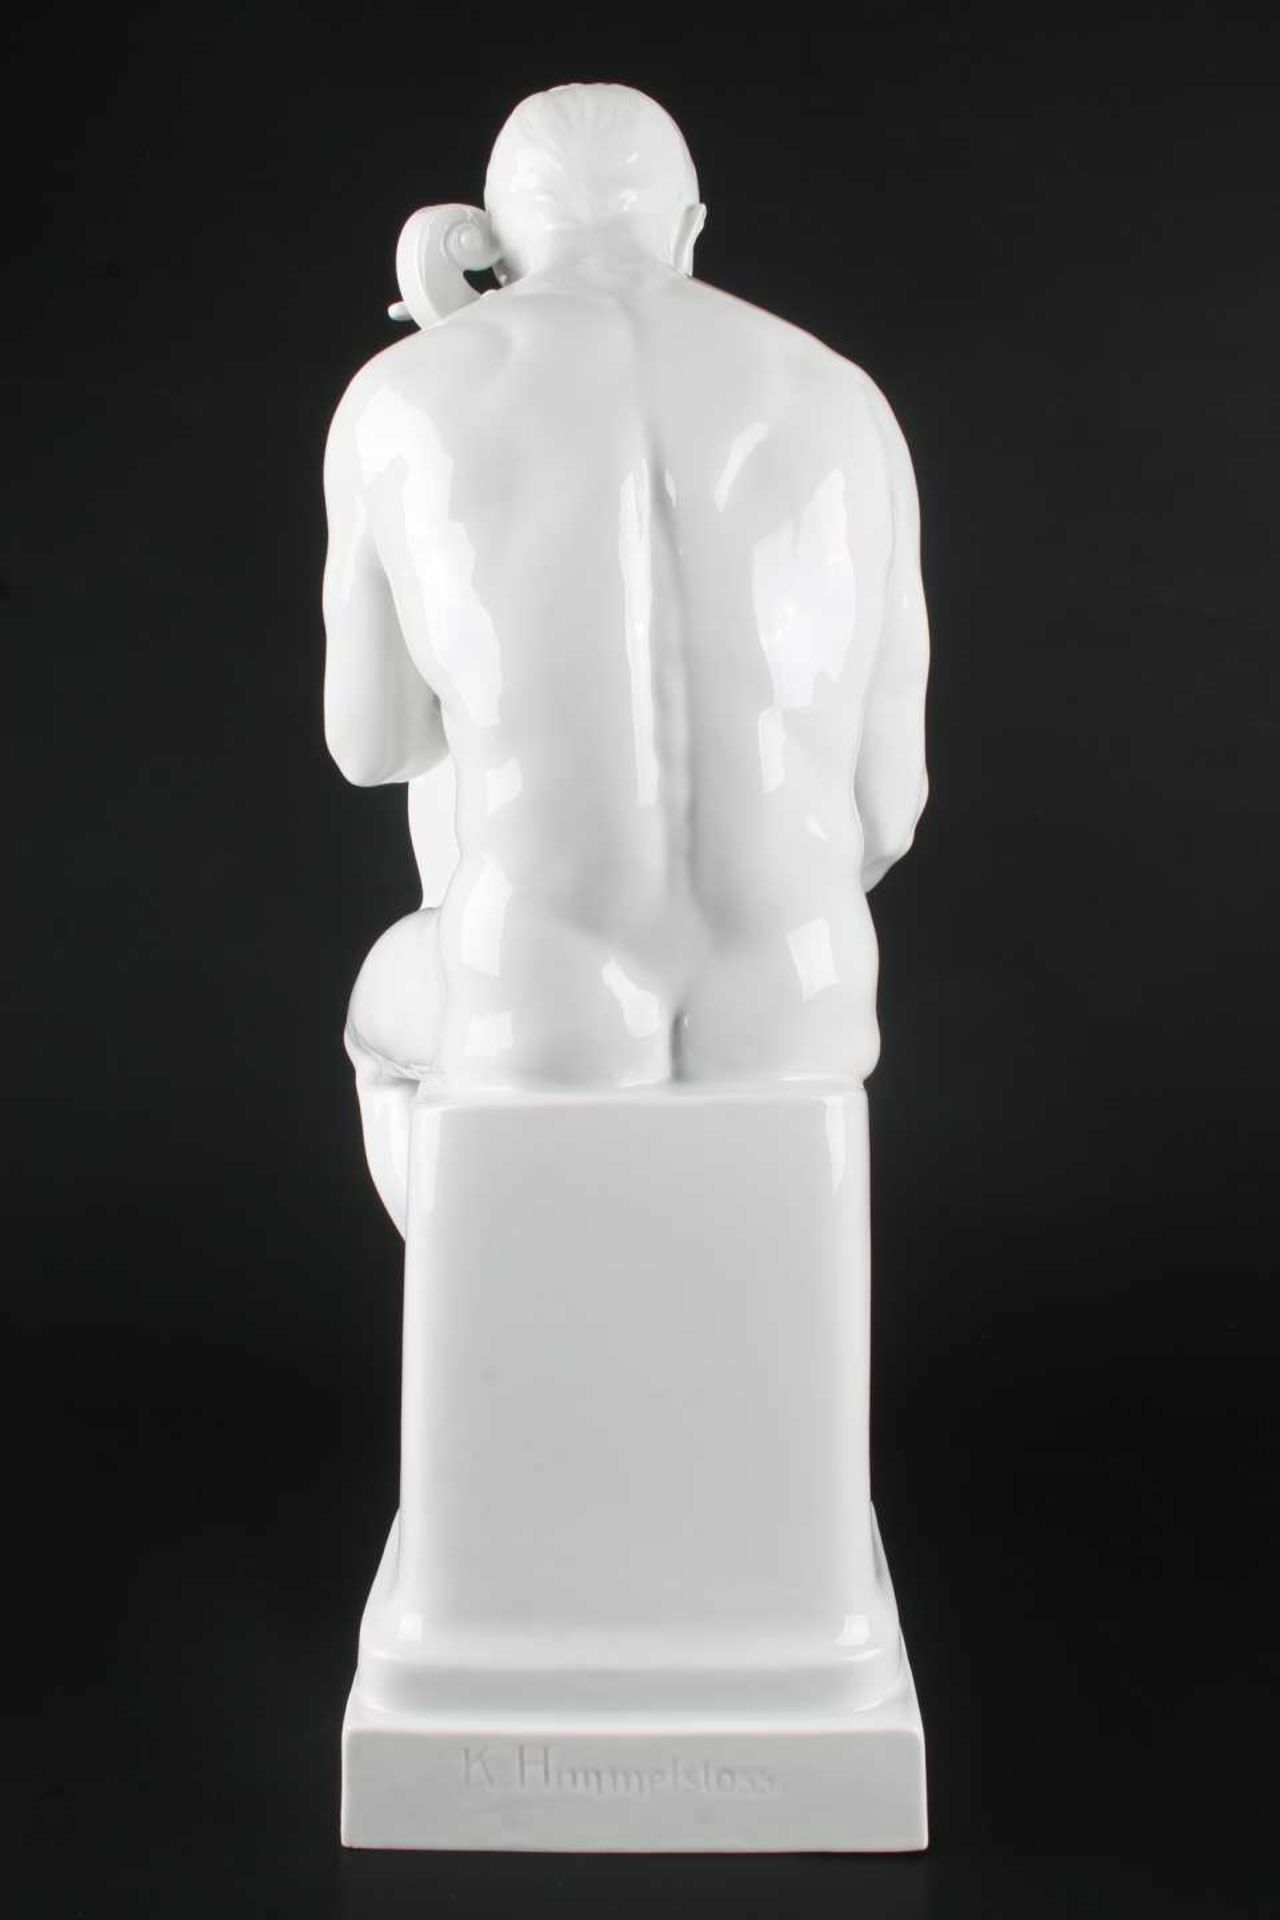 Rosenthal große Porzellanfigur Träumerei von Karl Himmelstoss, porcelain sculpture dreamery, - Image 4 of 9